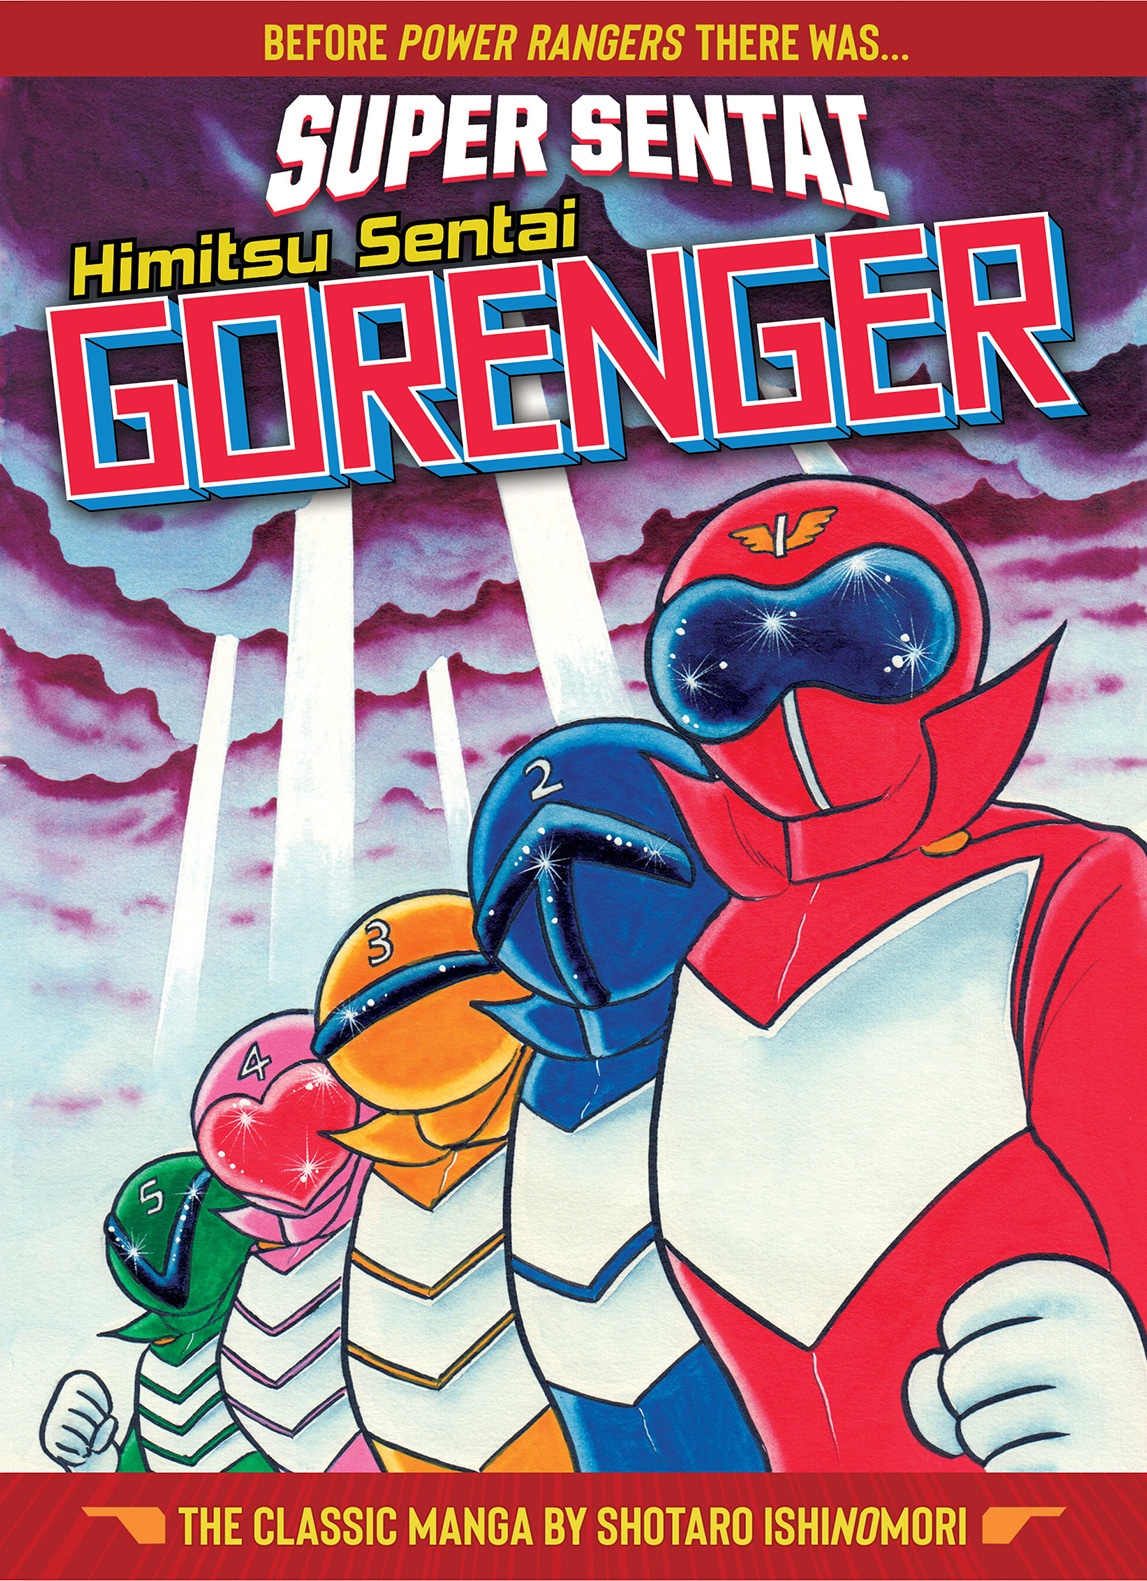 Himitsu Sentai Gorenger Manga Gets Official English Language Release - The Illuminerdi